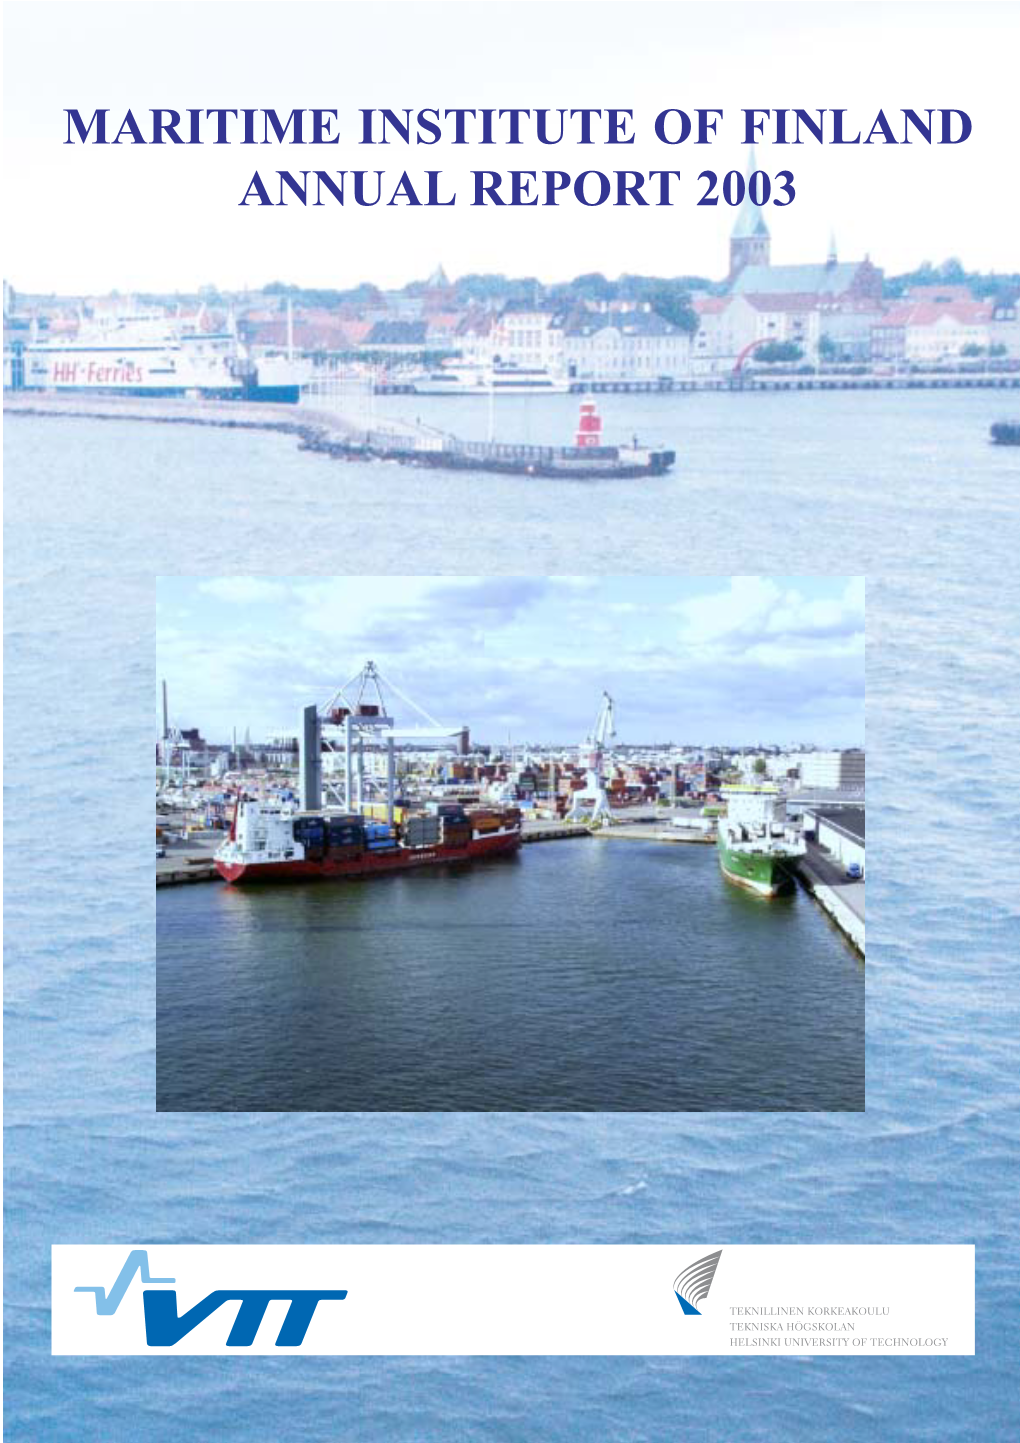 Maritime Institute of Finland Annual Report 2003